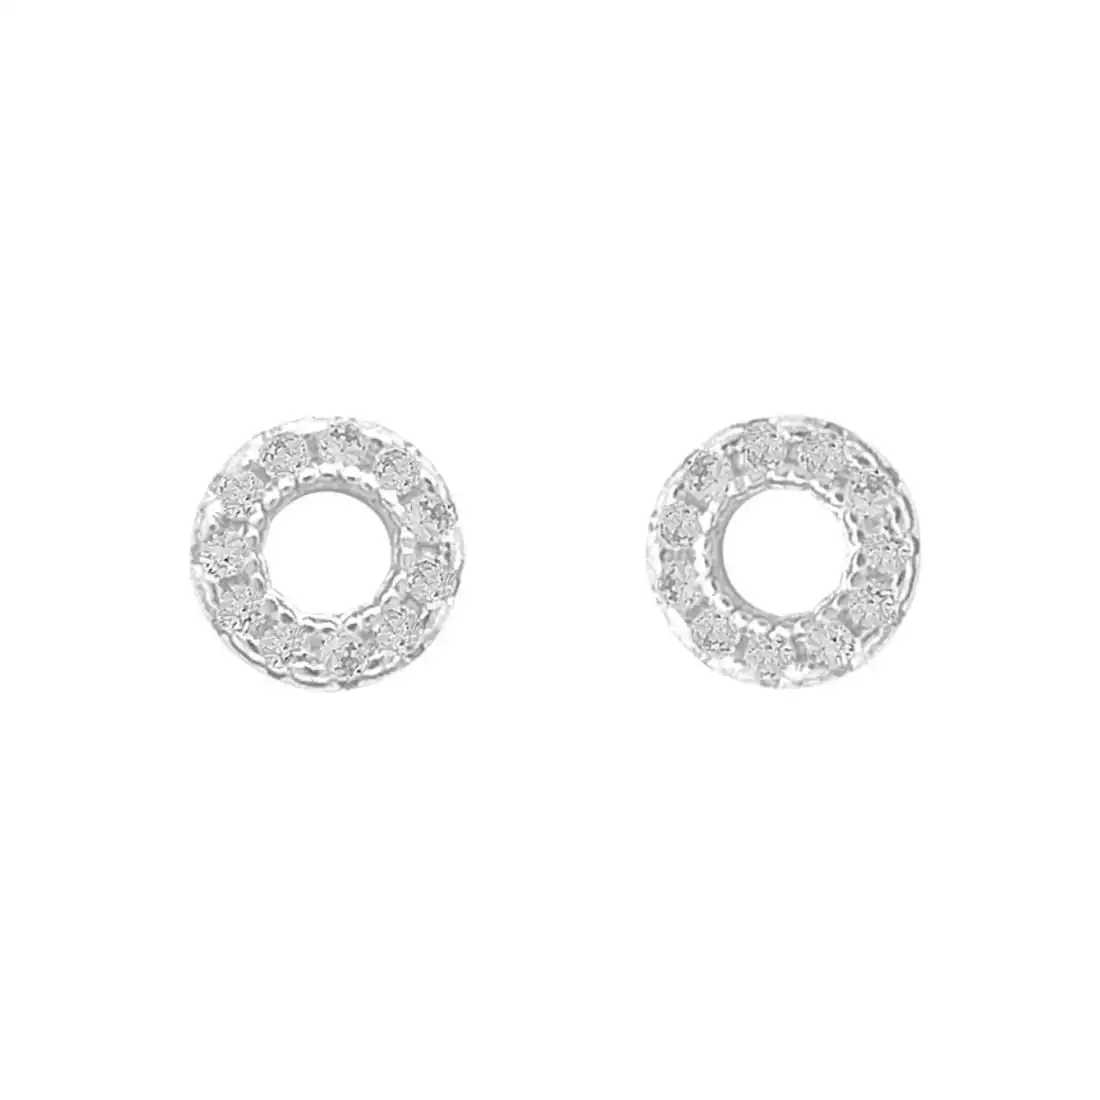 5mm Children's Open Circle Sterling Silver Stud Earrings